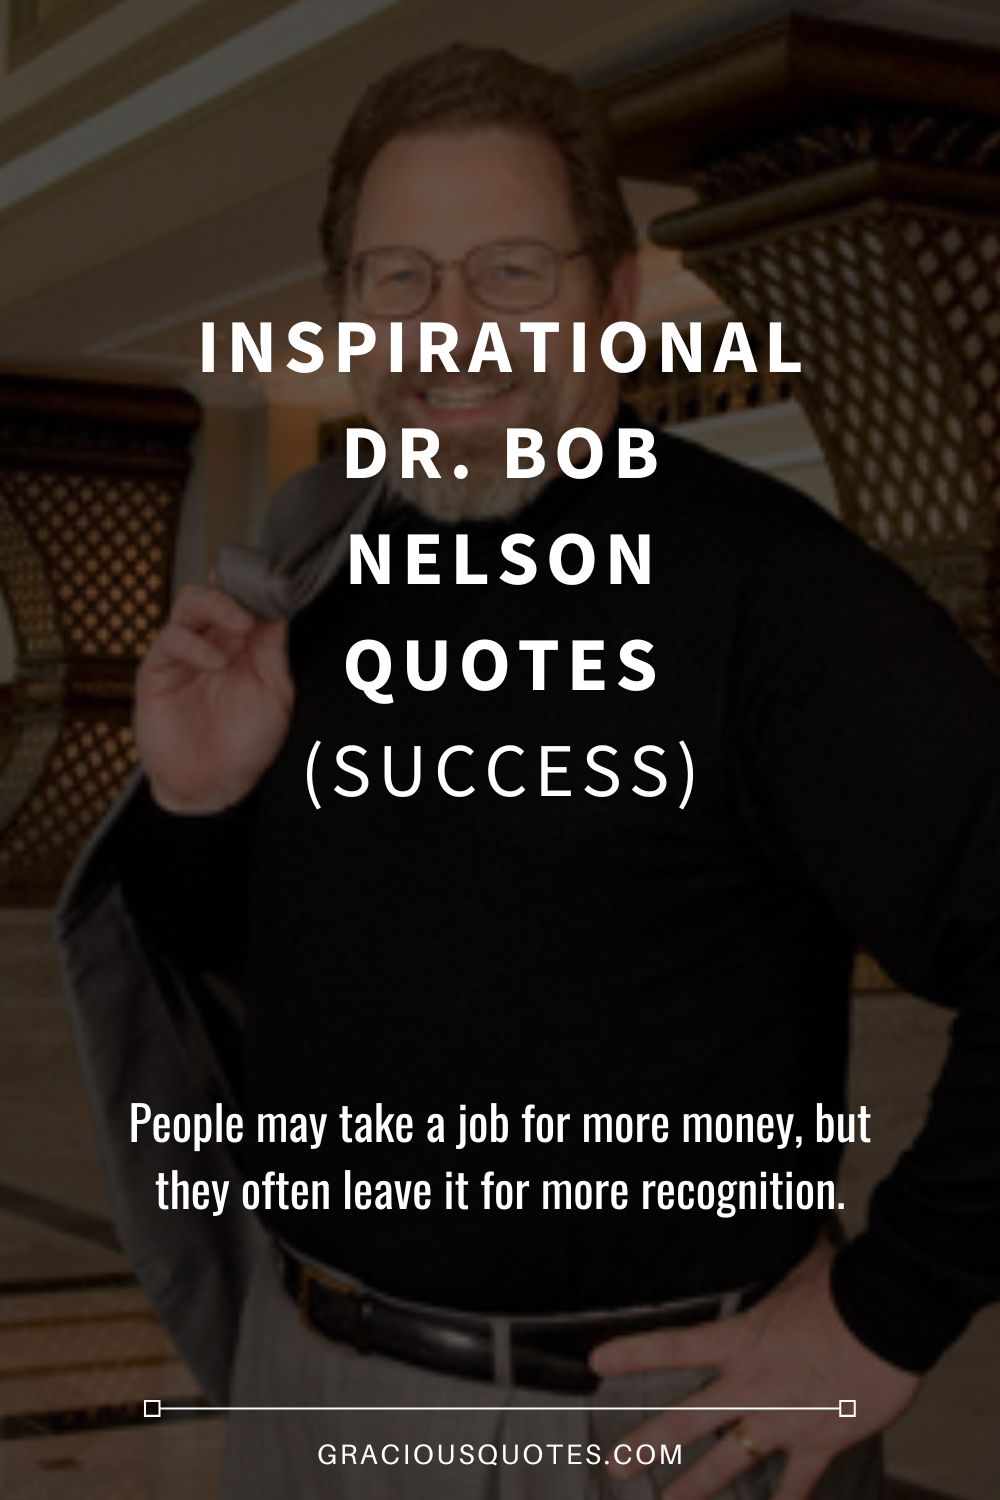 Inspirational Dr. Bob Nelson Quotes (SUCCESS) - Gracious Quotes